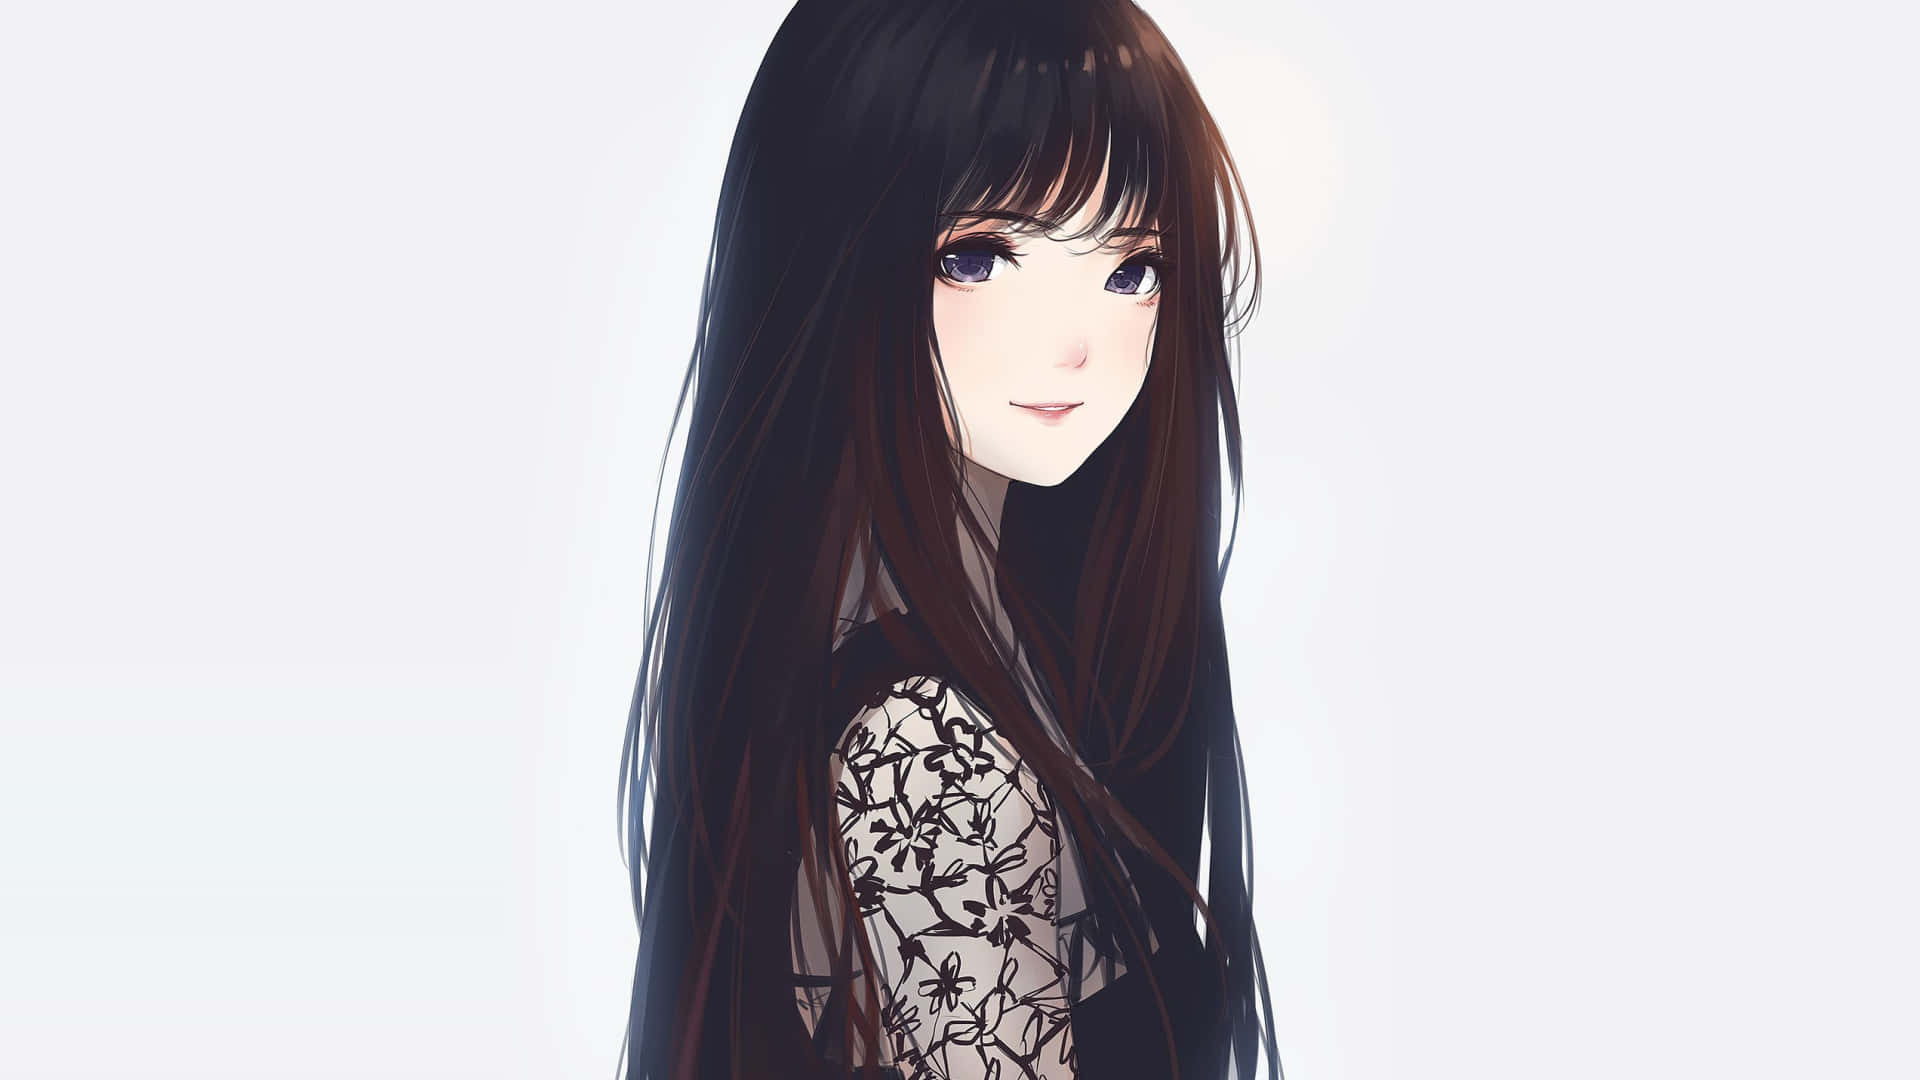 Korean Anime Girl With Long Black Hair Background